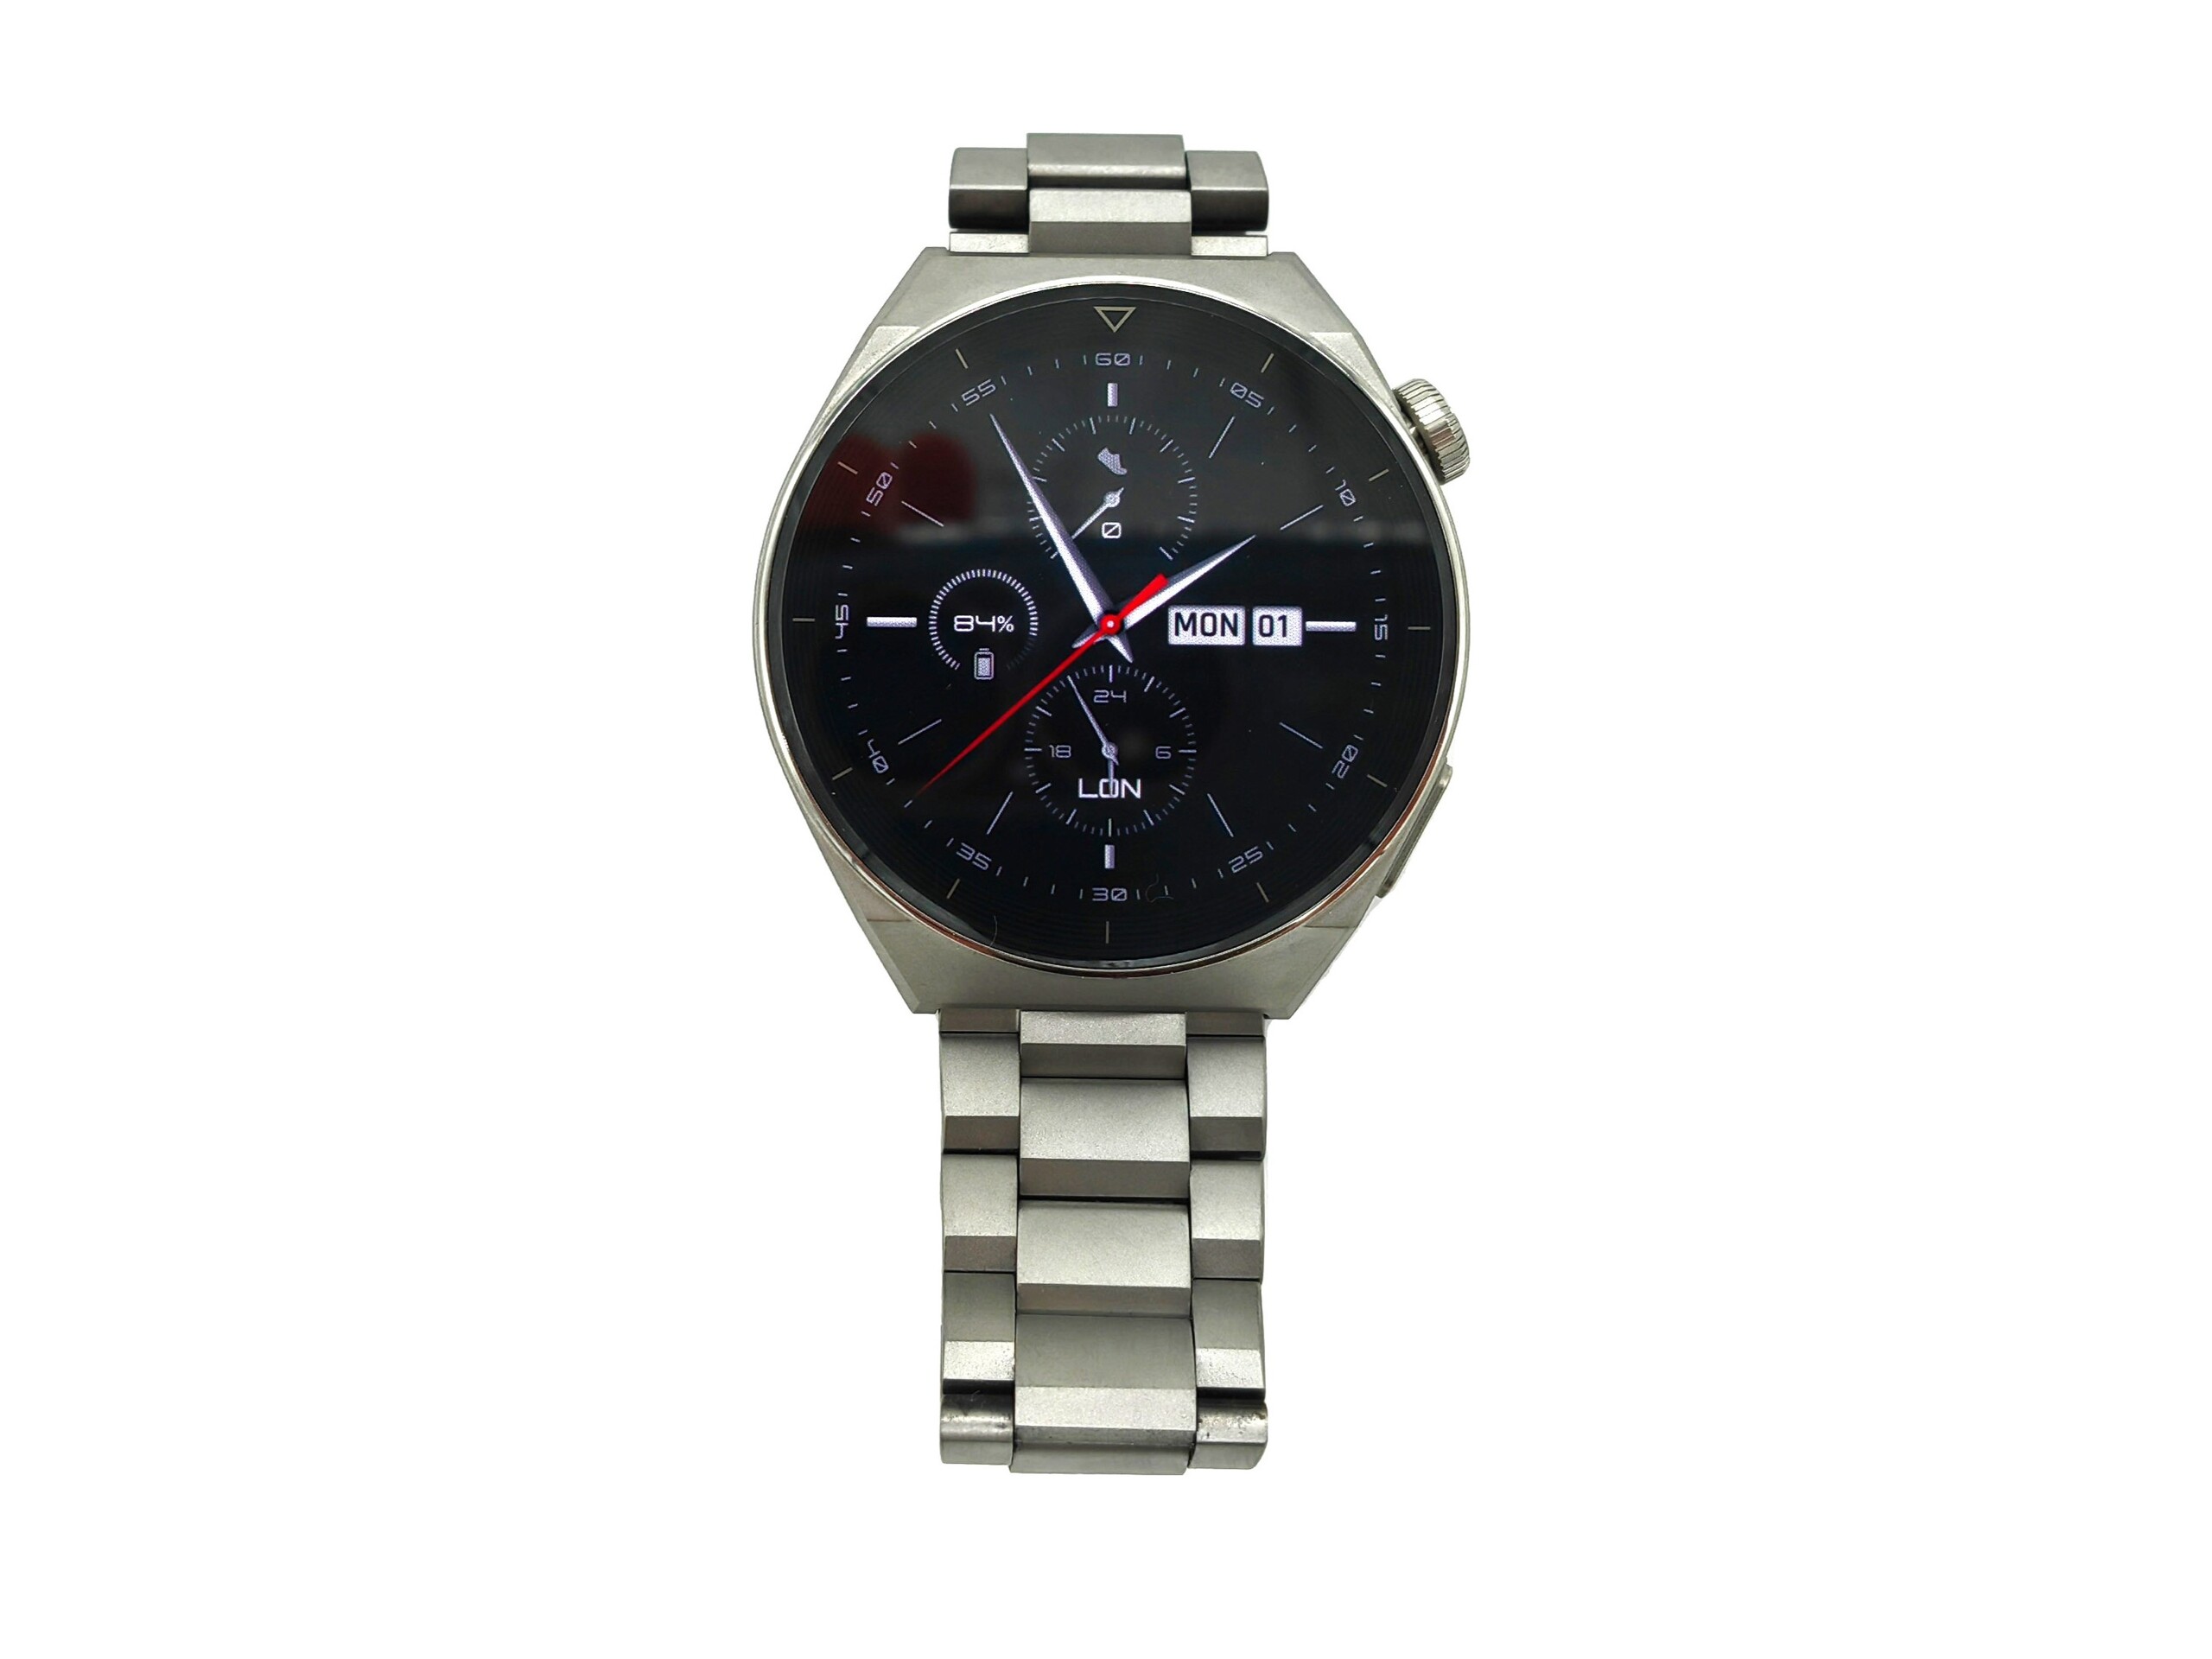 Huawei Watch GT 3 Pro review: A luxurious smartwatch lacking wide